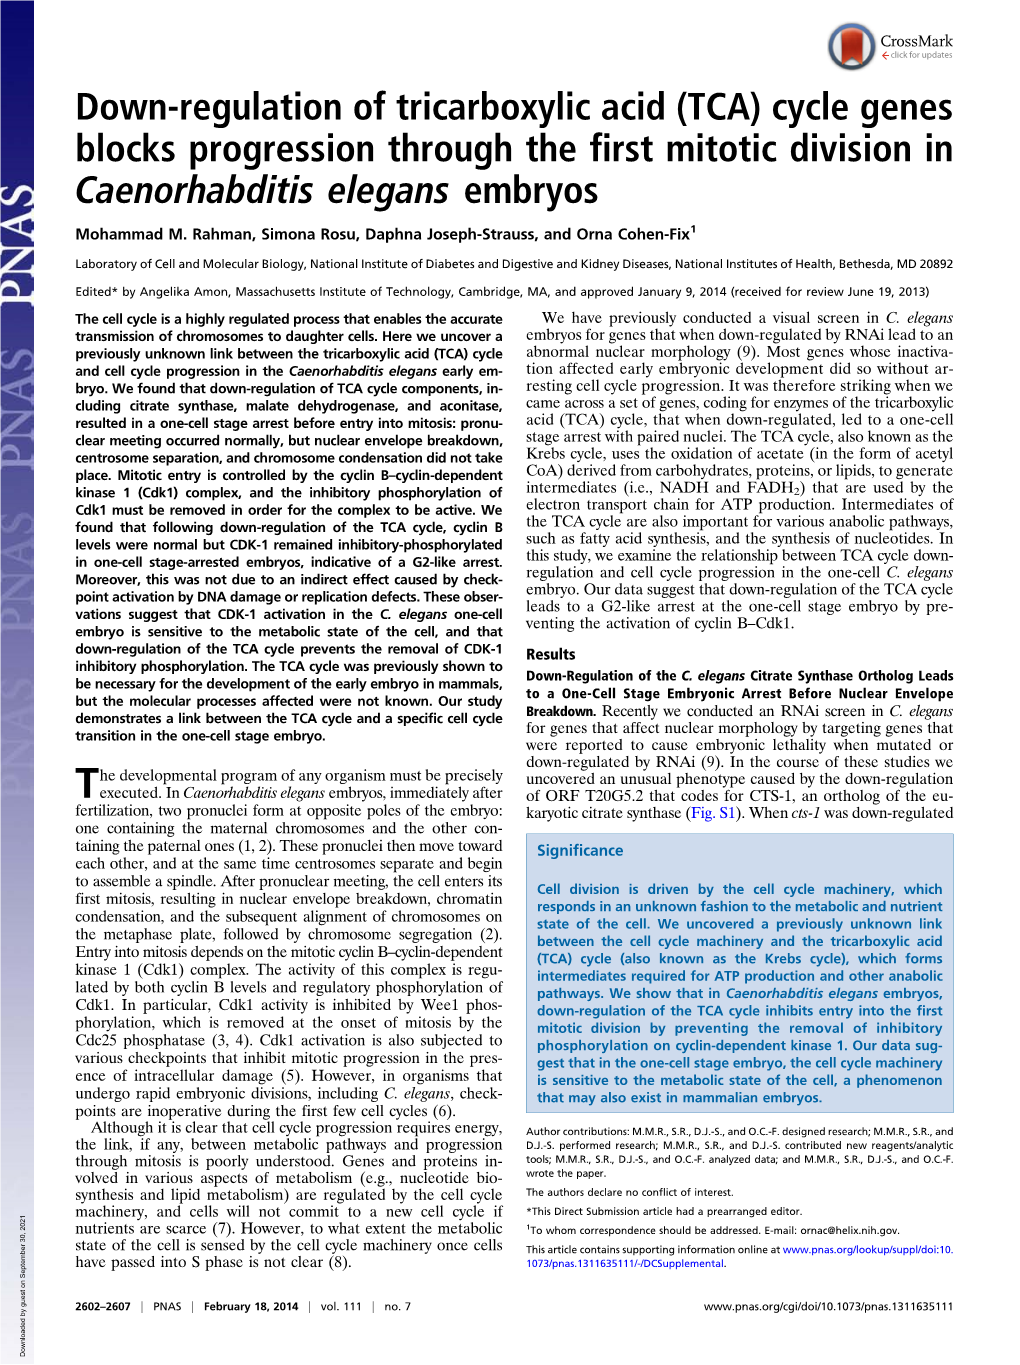 Down-Regulation of Tricarboxylic Acid (TCA) Cycle Genes Blocks Progression Through the First Mitotic Division in Caenorhabditis Elegans Embryos